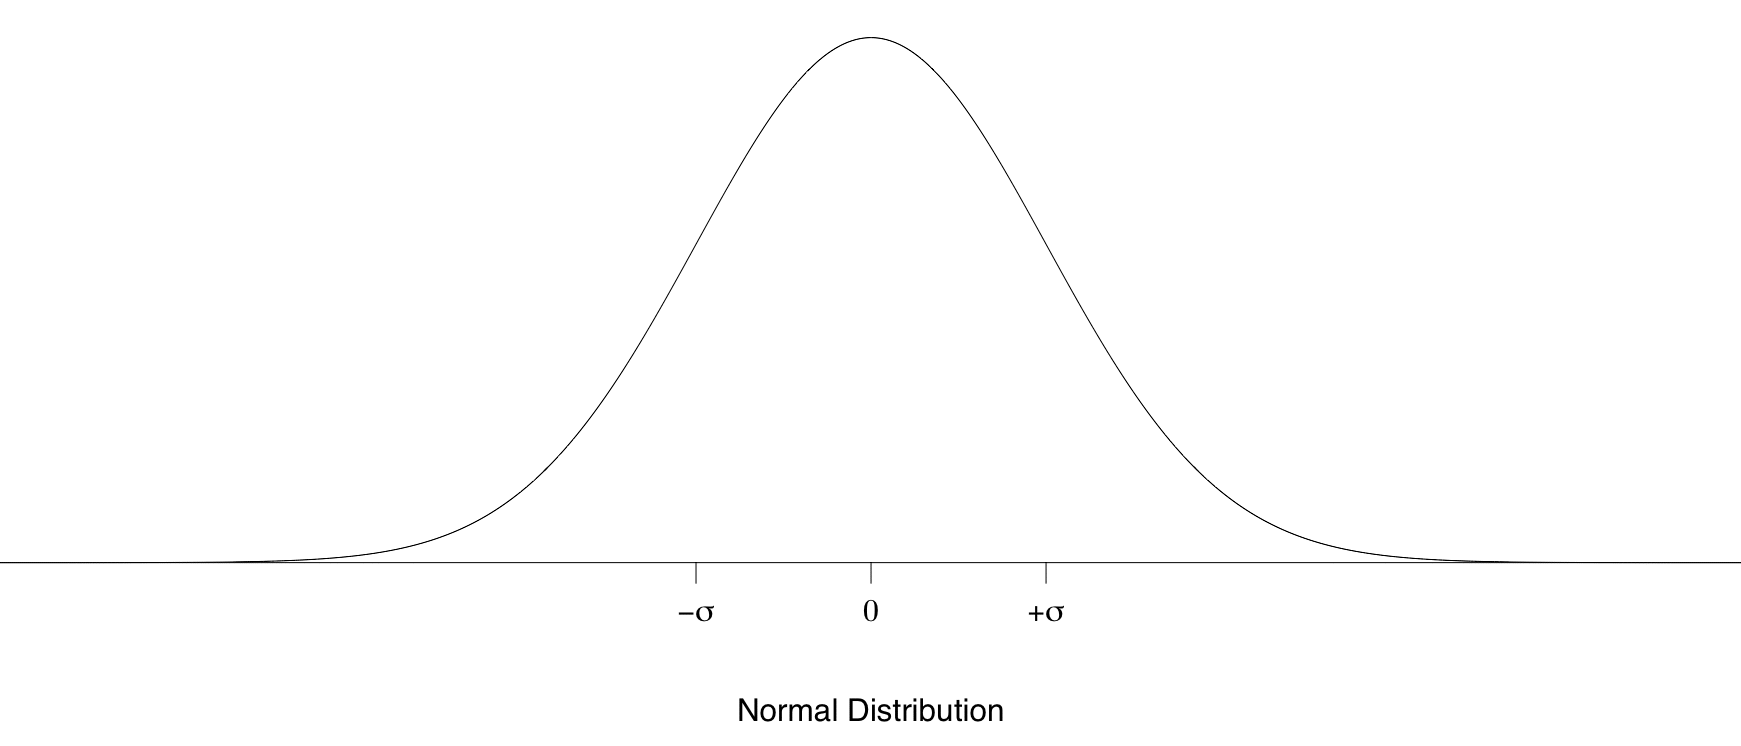  Statistical model of normal distribution